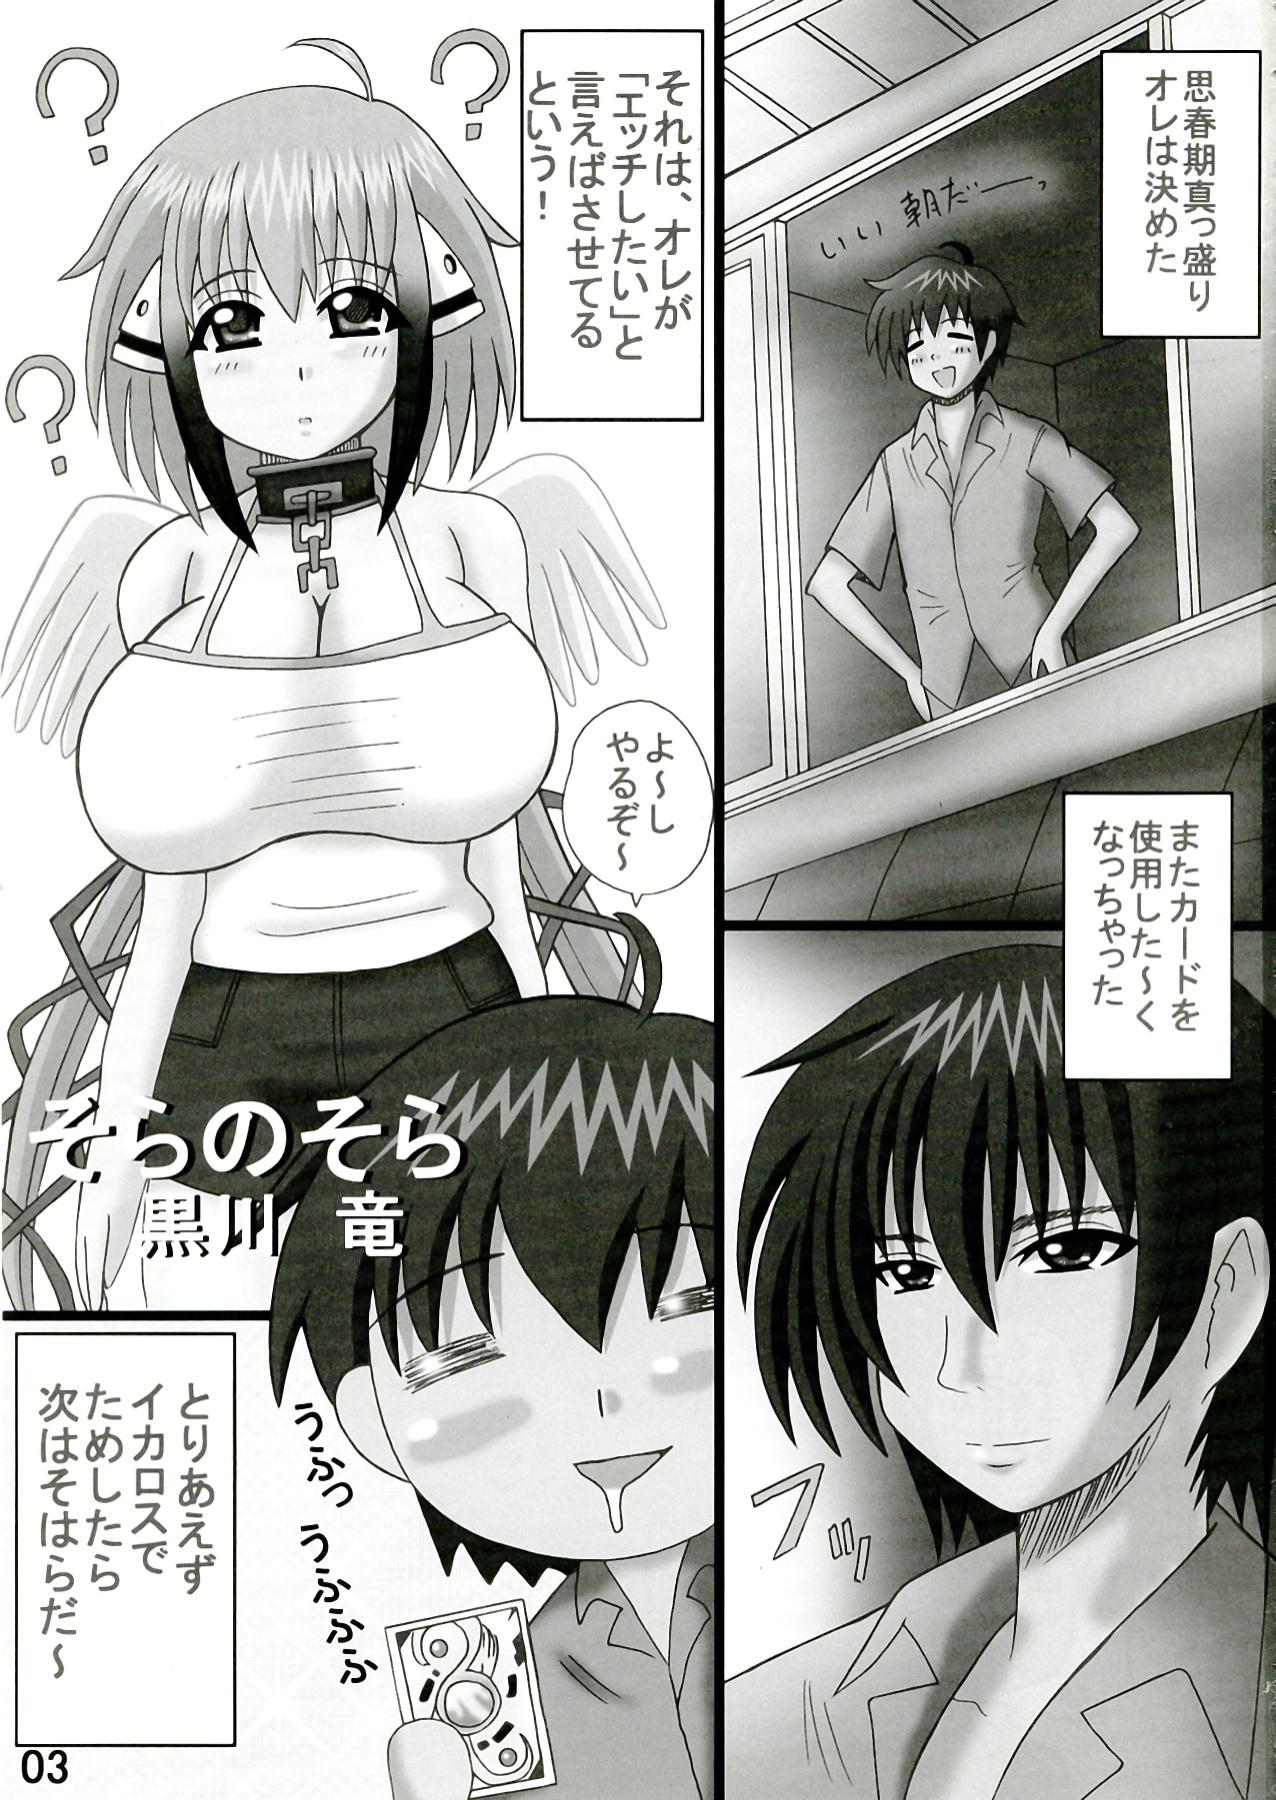 Adorable Sora no Sora - Sora no otoshimono Style - Page 3